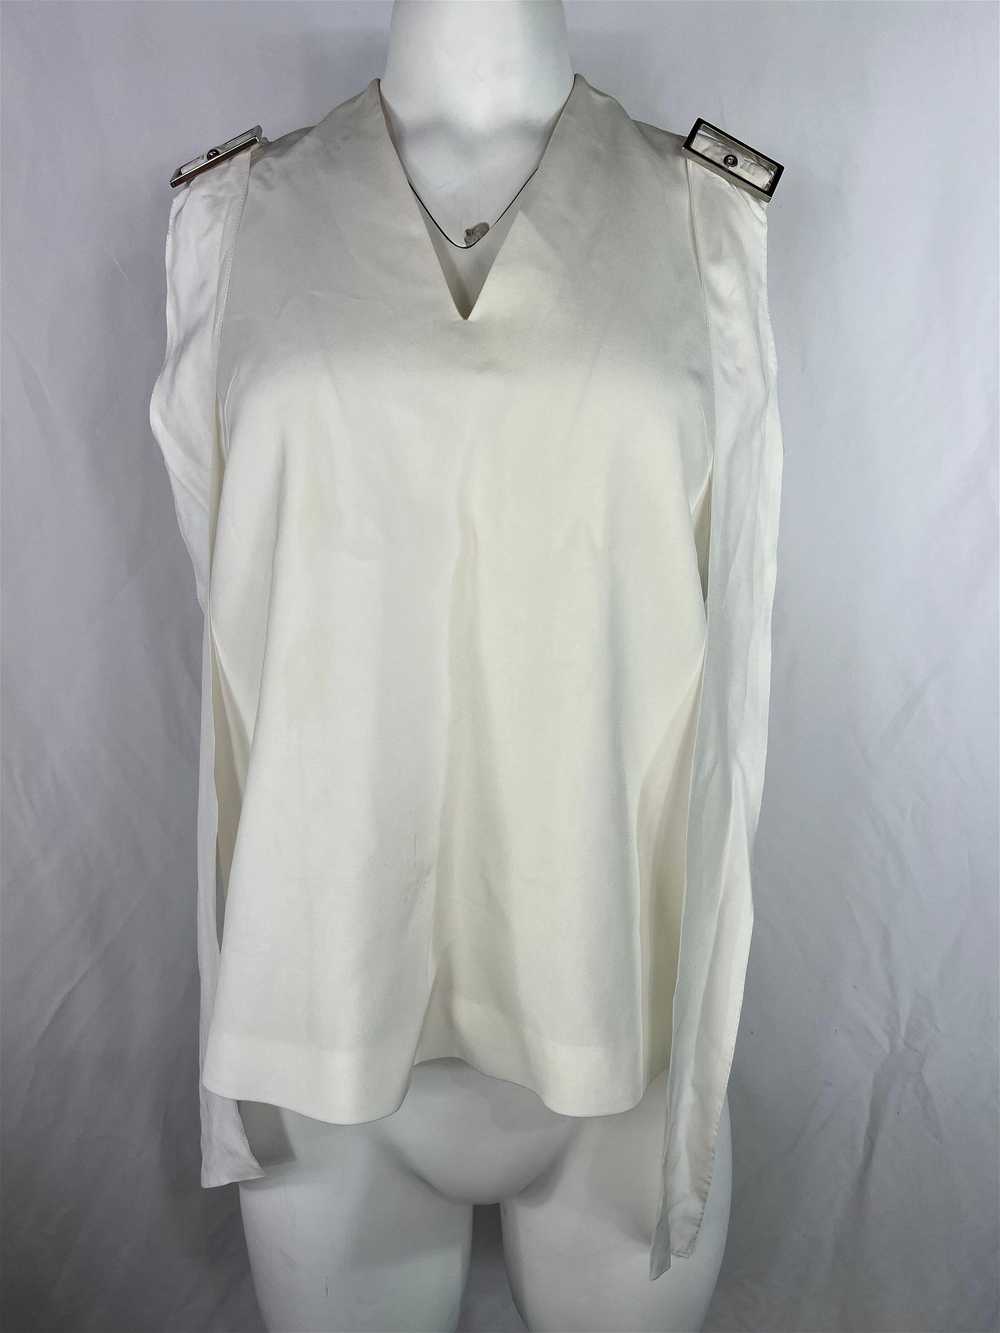 Akira Naka White Top Blouse, Size 3 - image 7